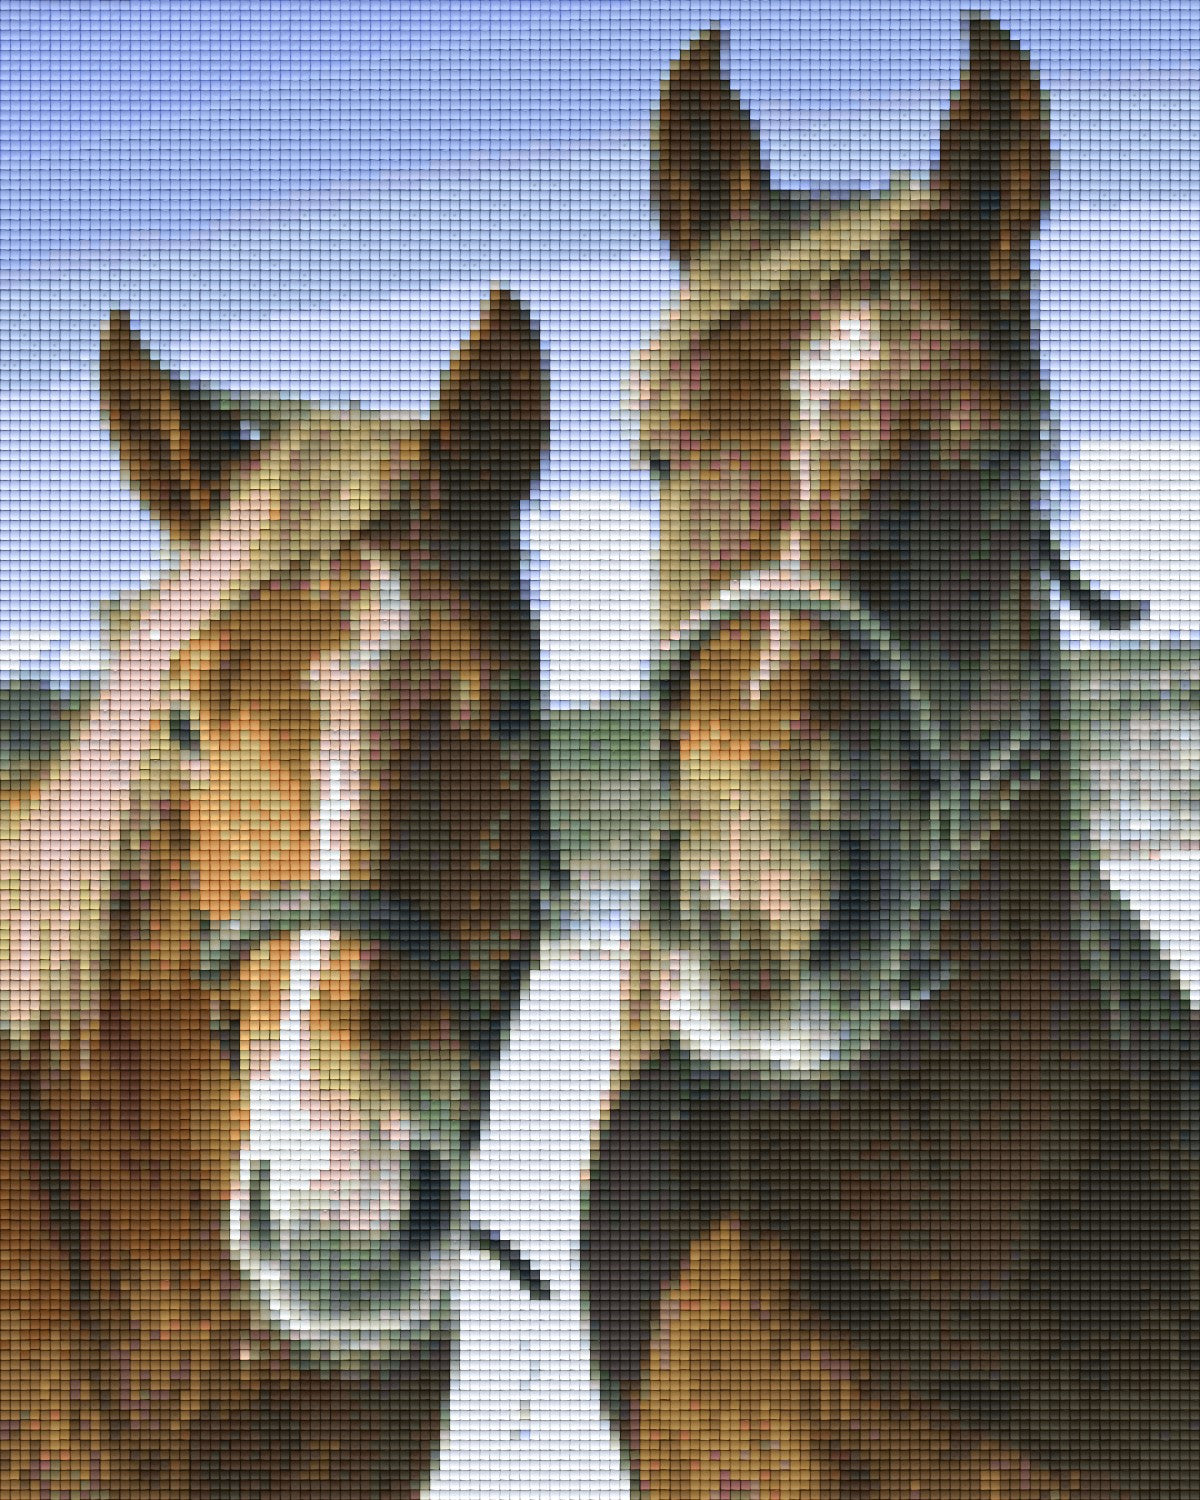 Pixelhobby classic set - brown thoroughbred horses